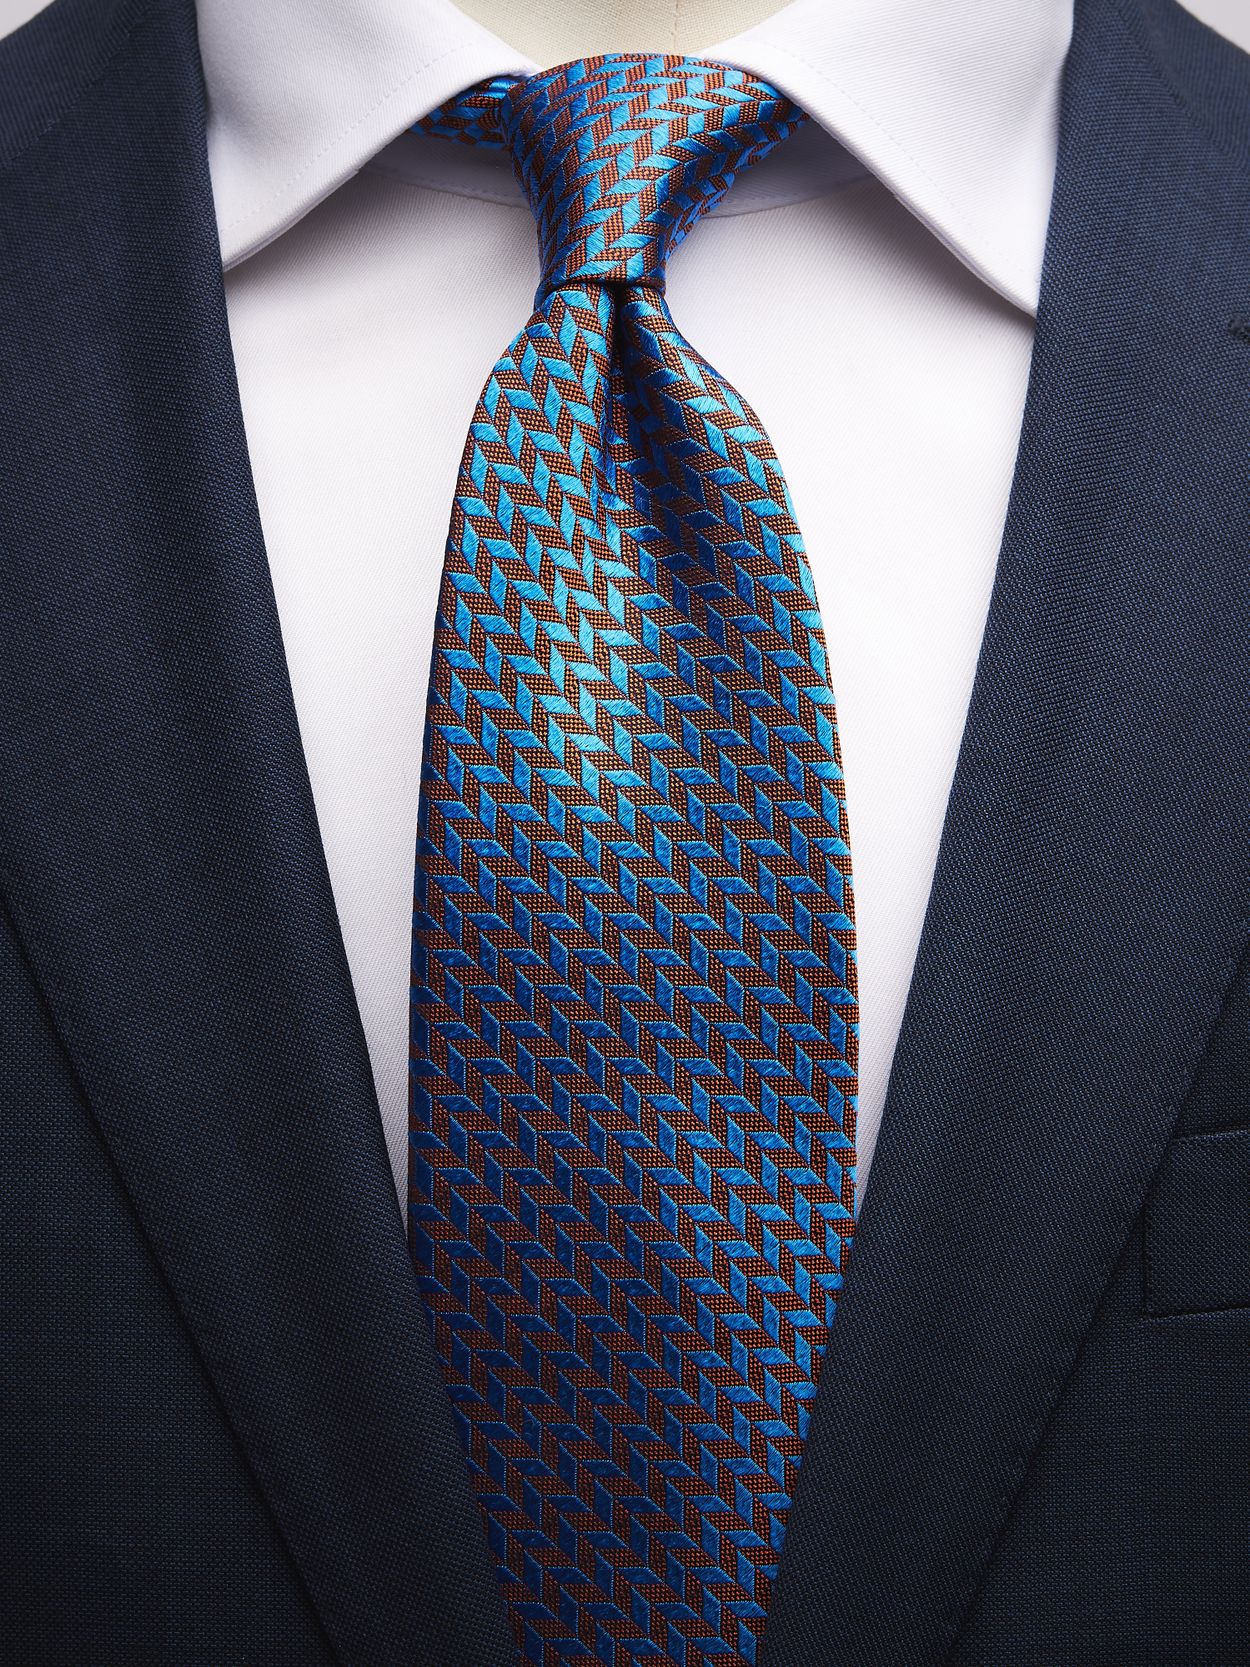 Blue & Orange Tie Motif